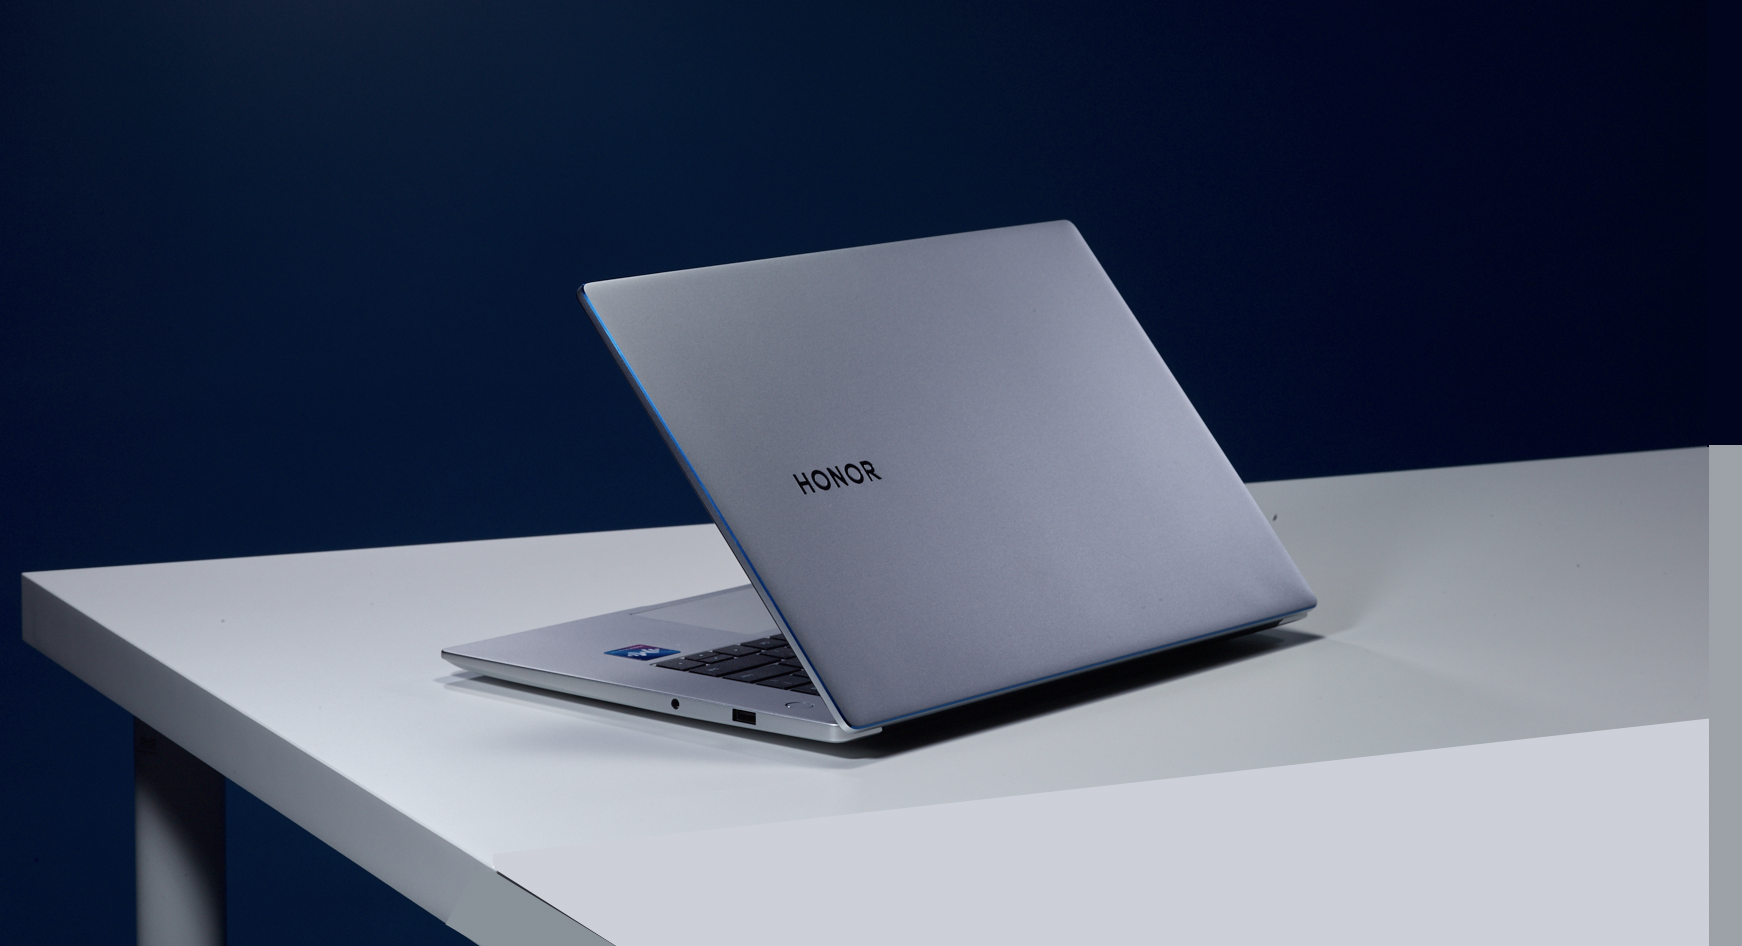  HONOR Magic 15 bakal menjadi pilihan utama komputer riba dibawah bajet RM4,000 dengan spesifikasi canggih #HONORMagicBook15